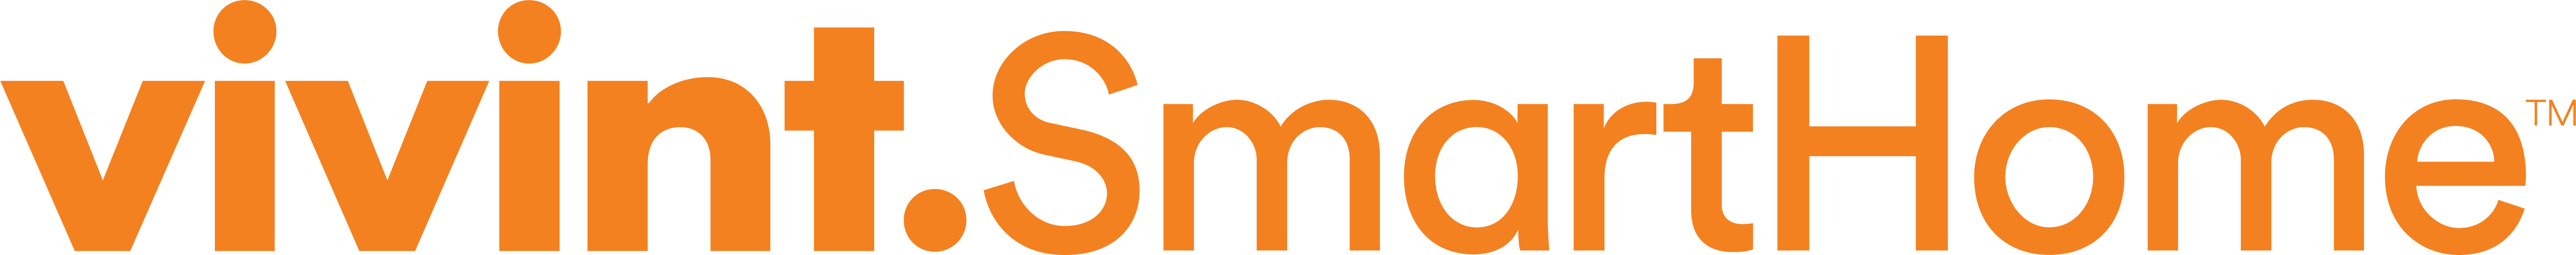 Vivint SmartHome logo